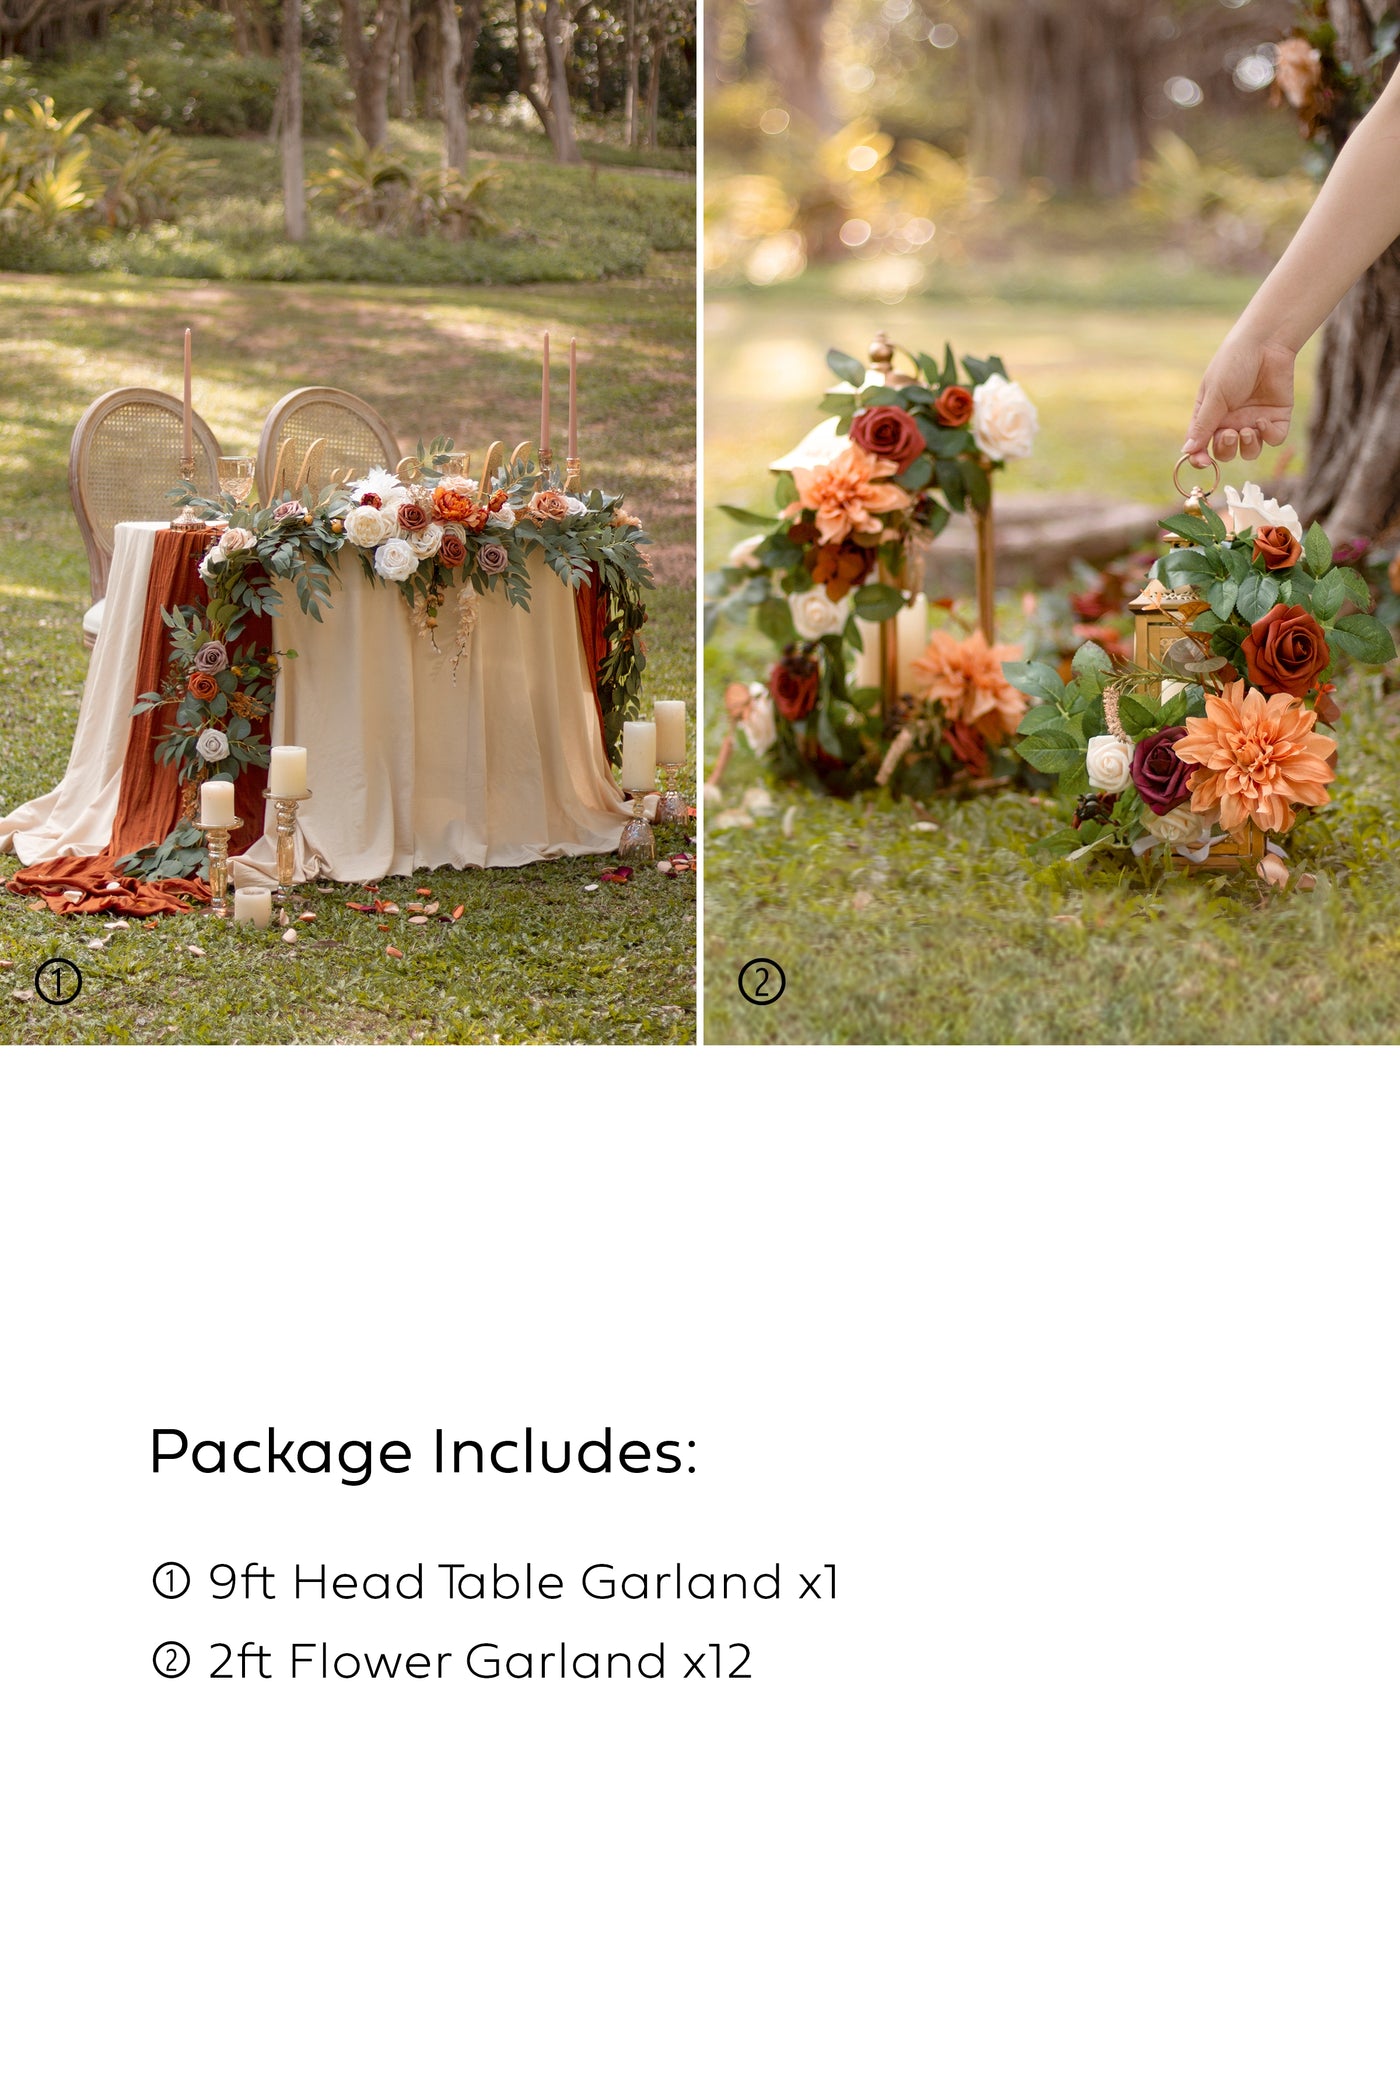 Pre-Arranged Wedding Flower Packages in Sunset Terracotta